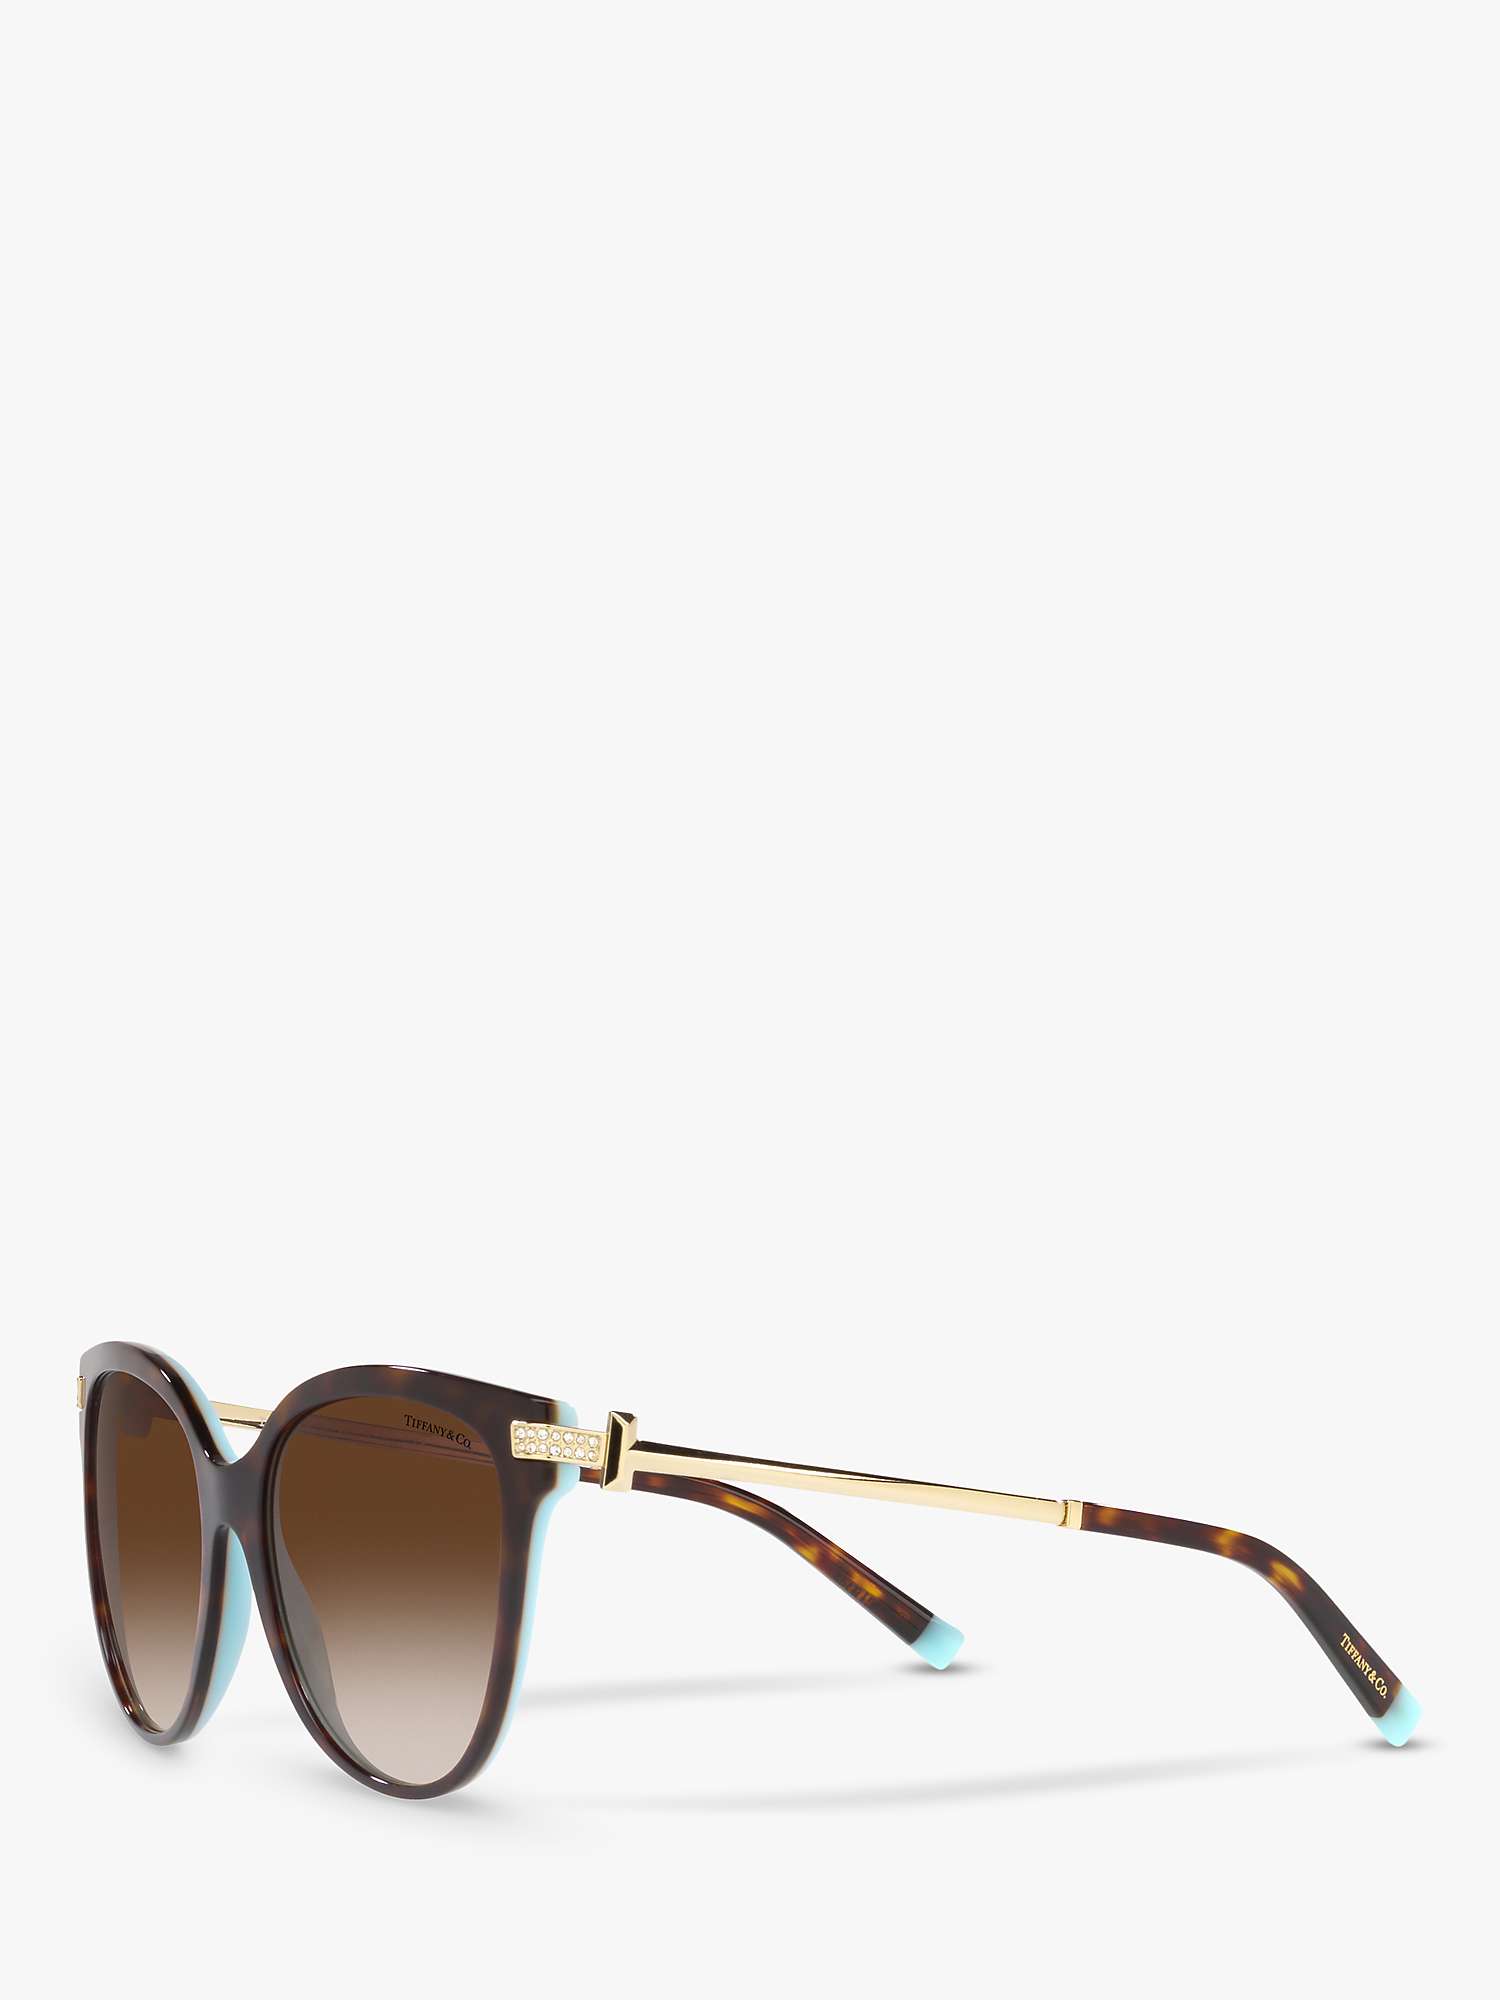 Buy Tiffany & Co TF4193B Women's Oval Sunglasses, Havana/Brown Gradient Online at johnlewis.com